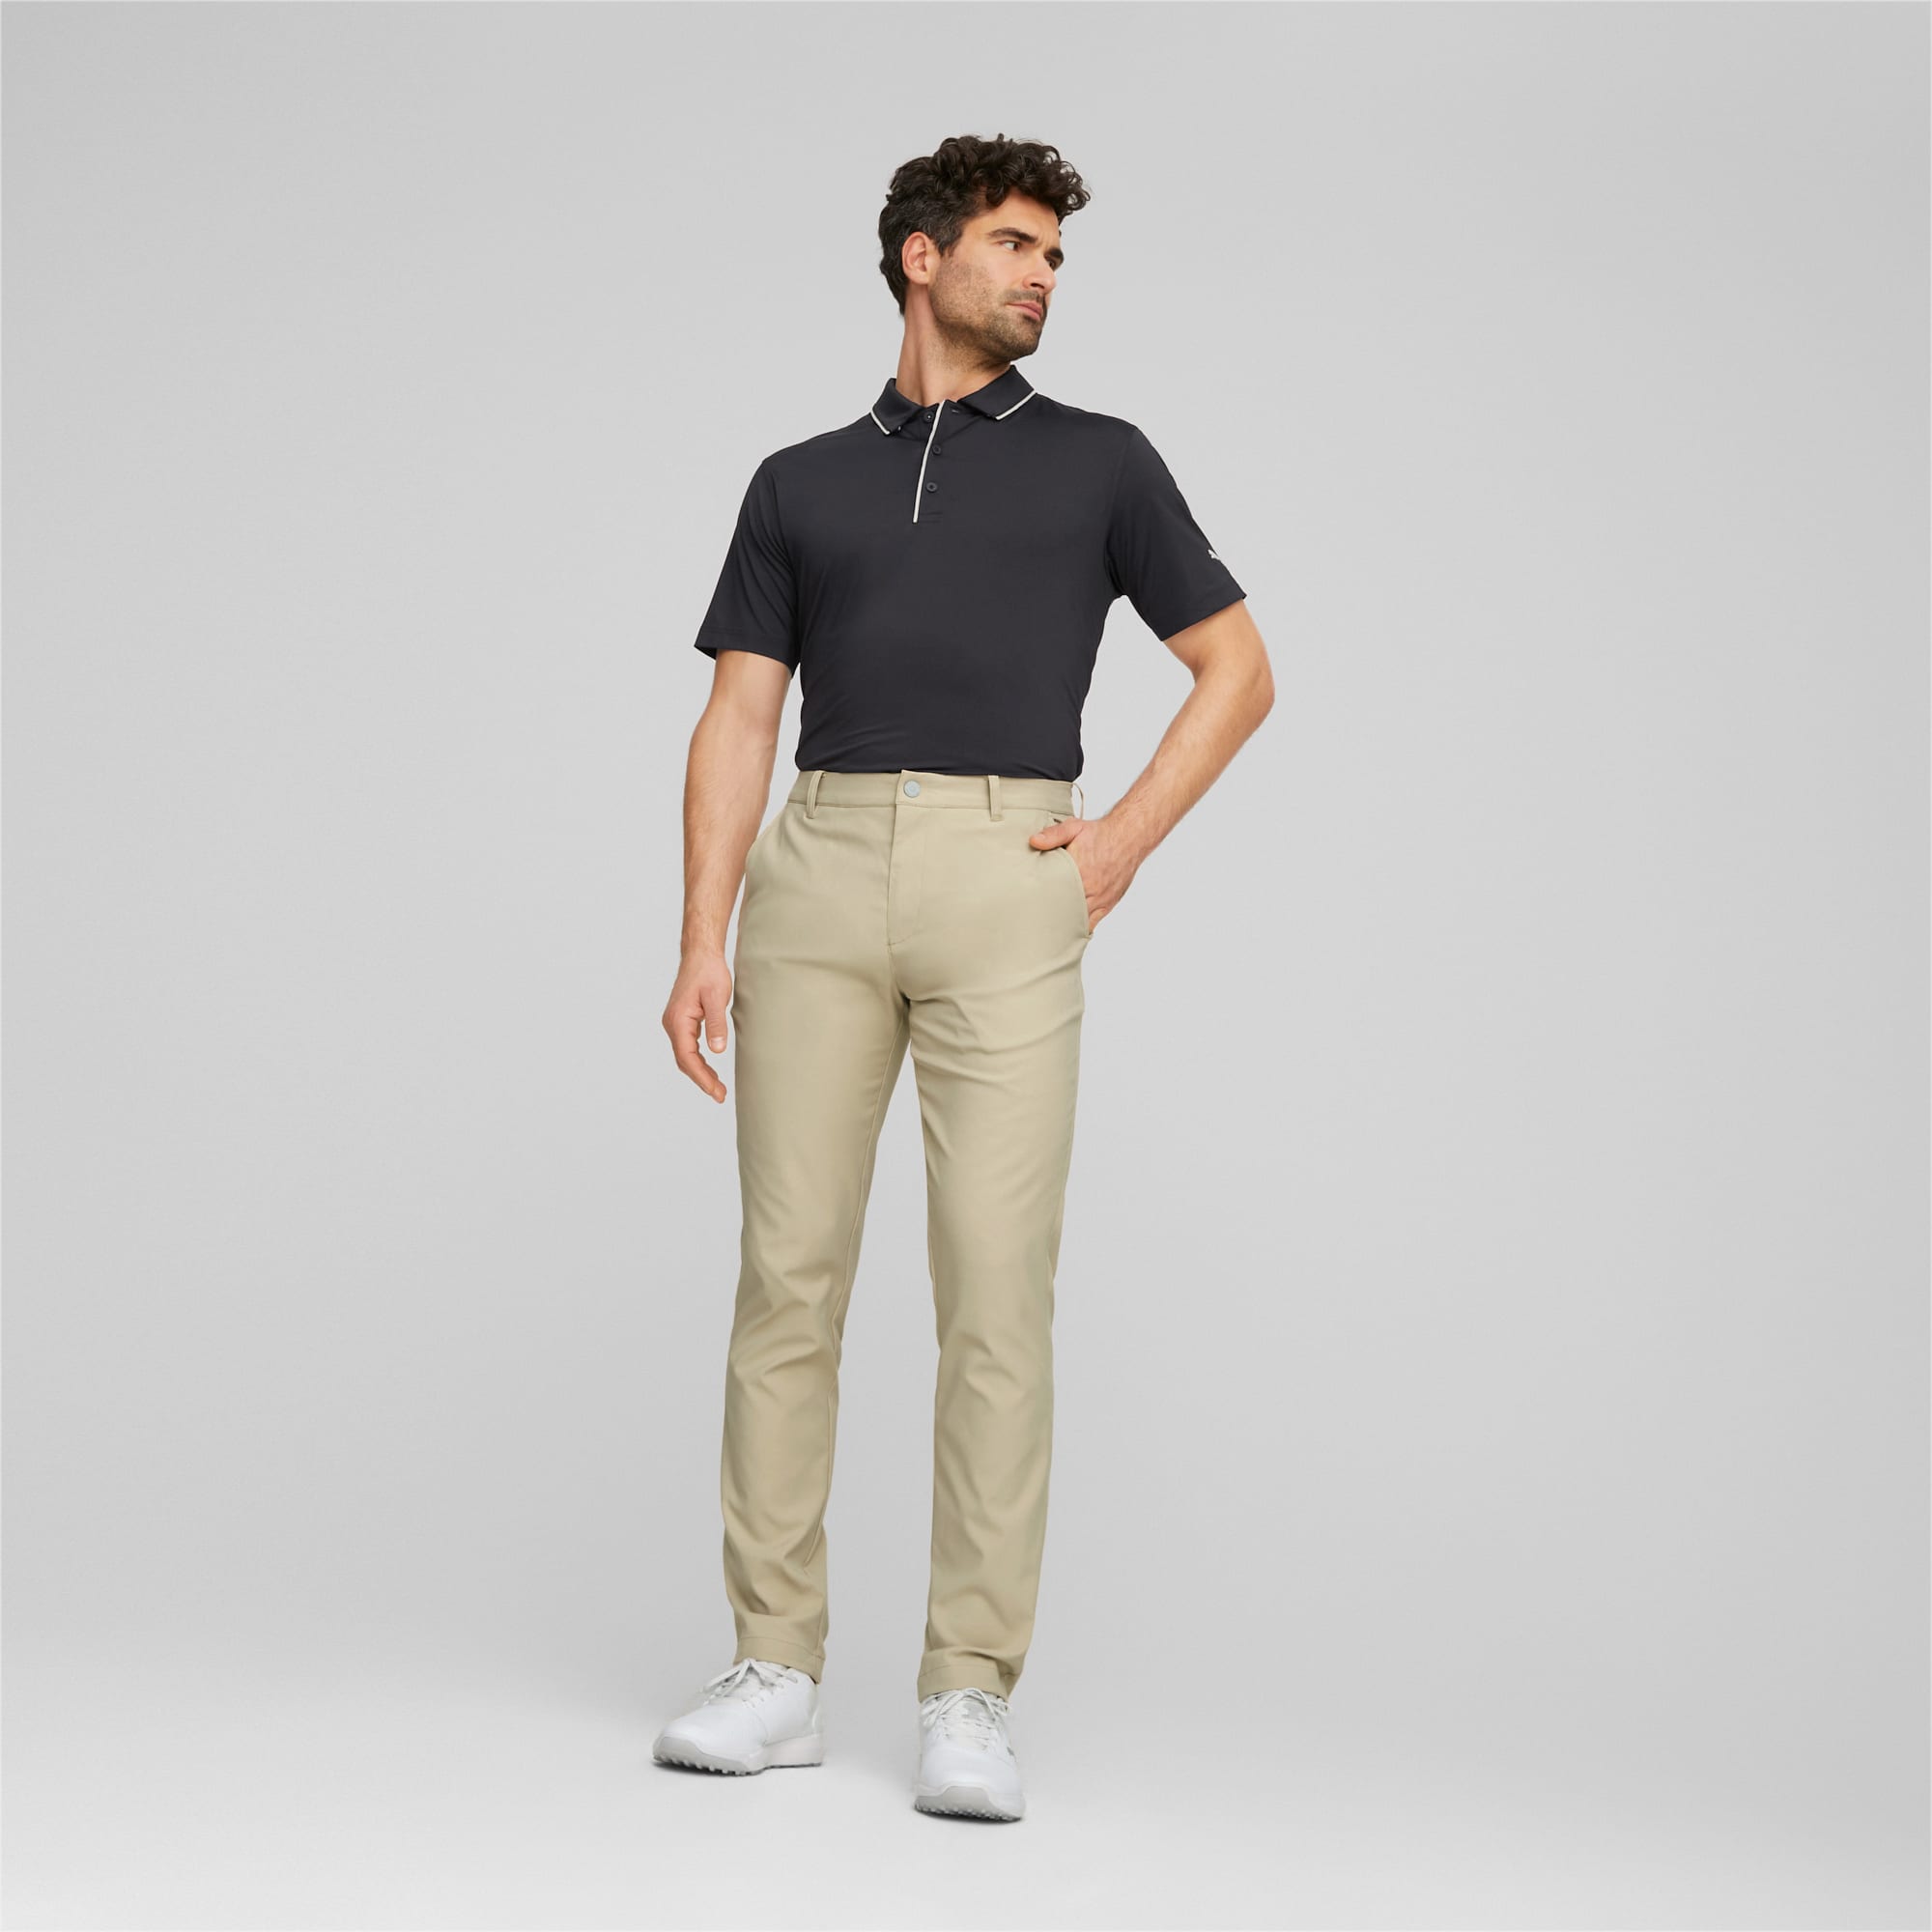 PUMA Dealer Tailored Golf Pants Men, Alabaster, Size 36/36, Clothing